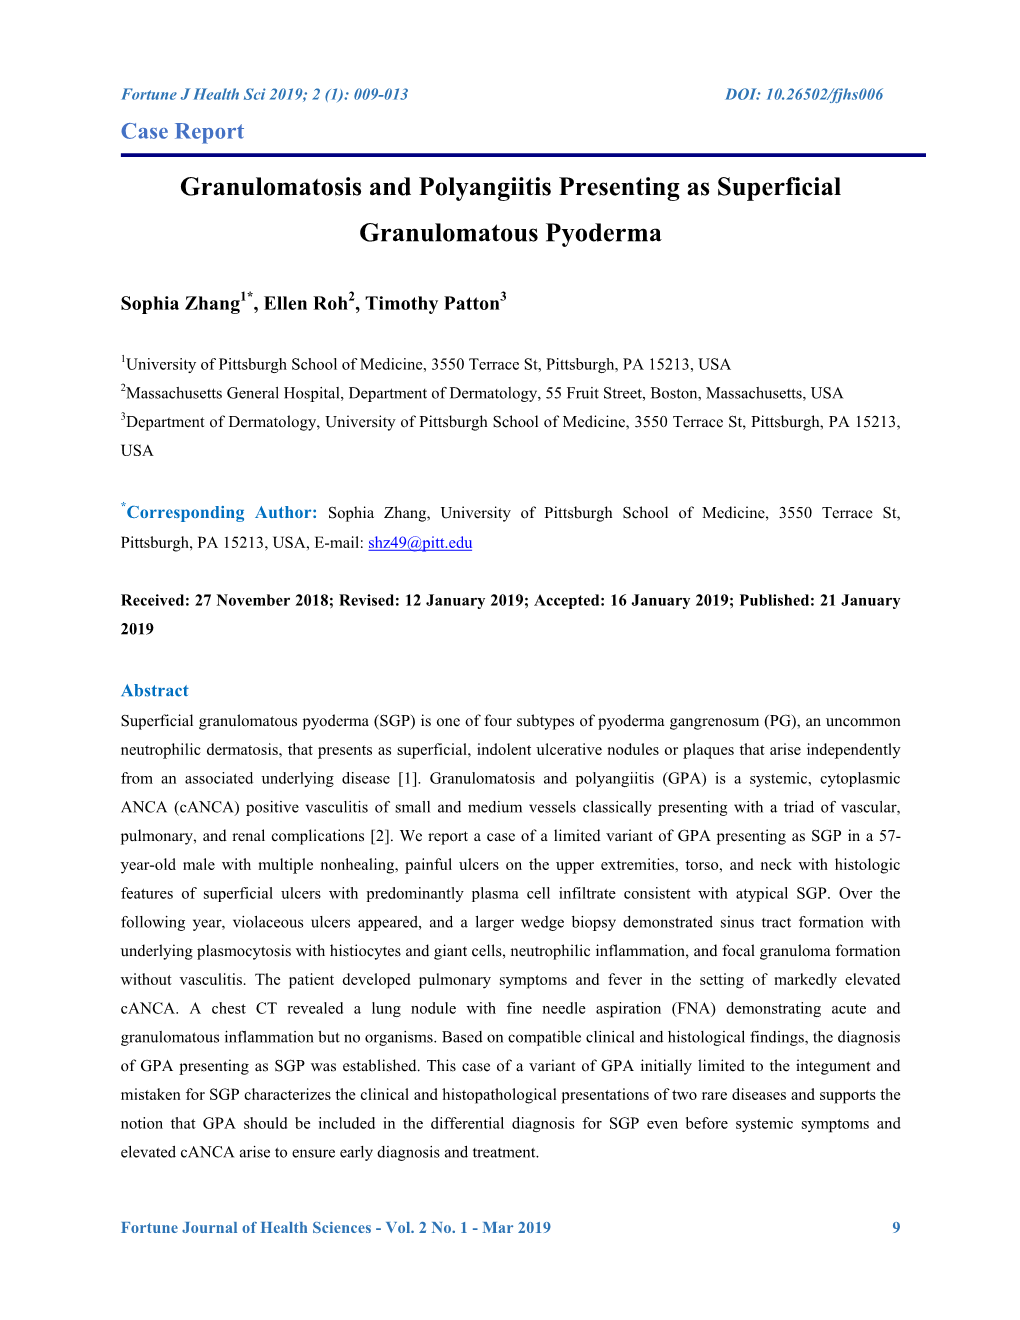 Granulomatosis and Polyangiitis Presenting As Superficial Granulomatous Pyoderma